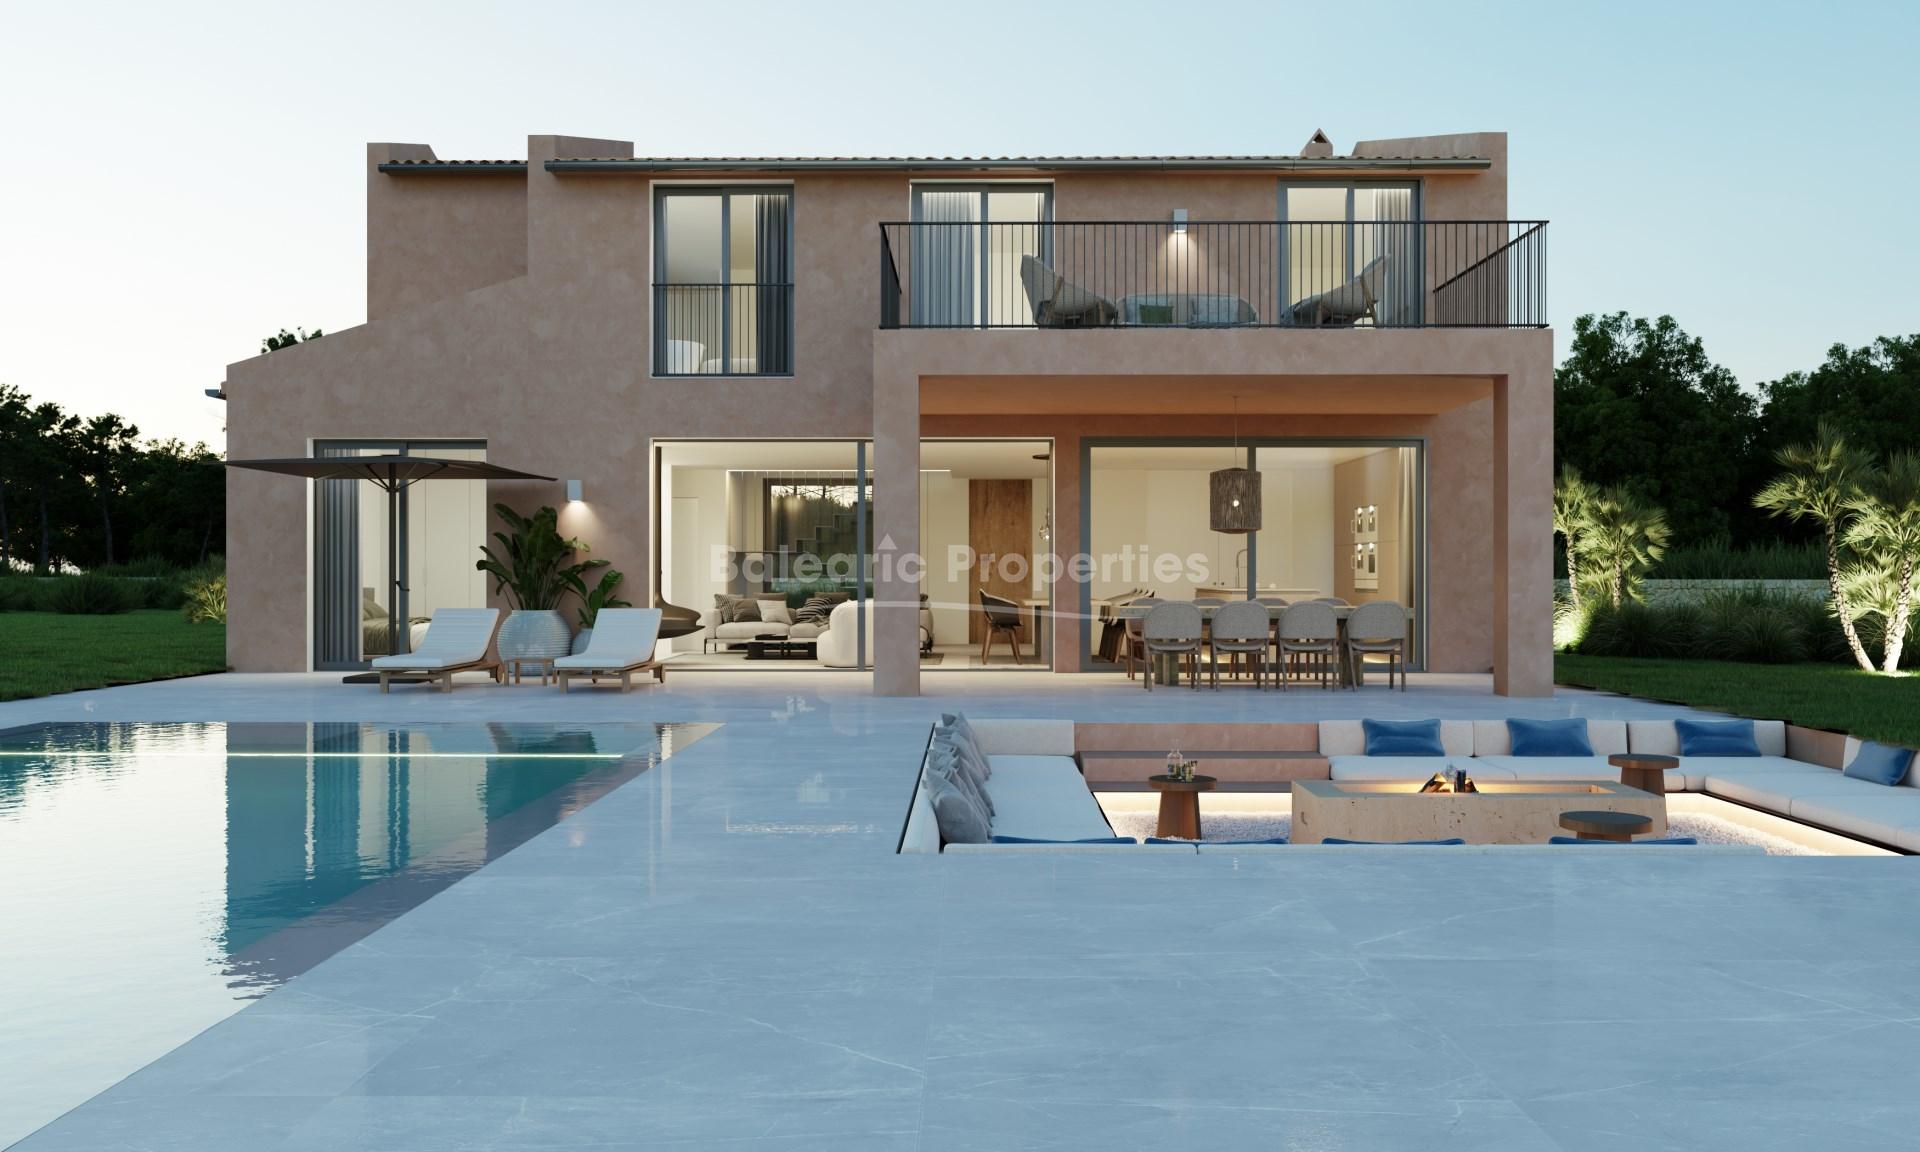 Impeccably designed new villa for sale in the countryside of Sencelles, Mallorca